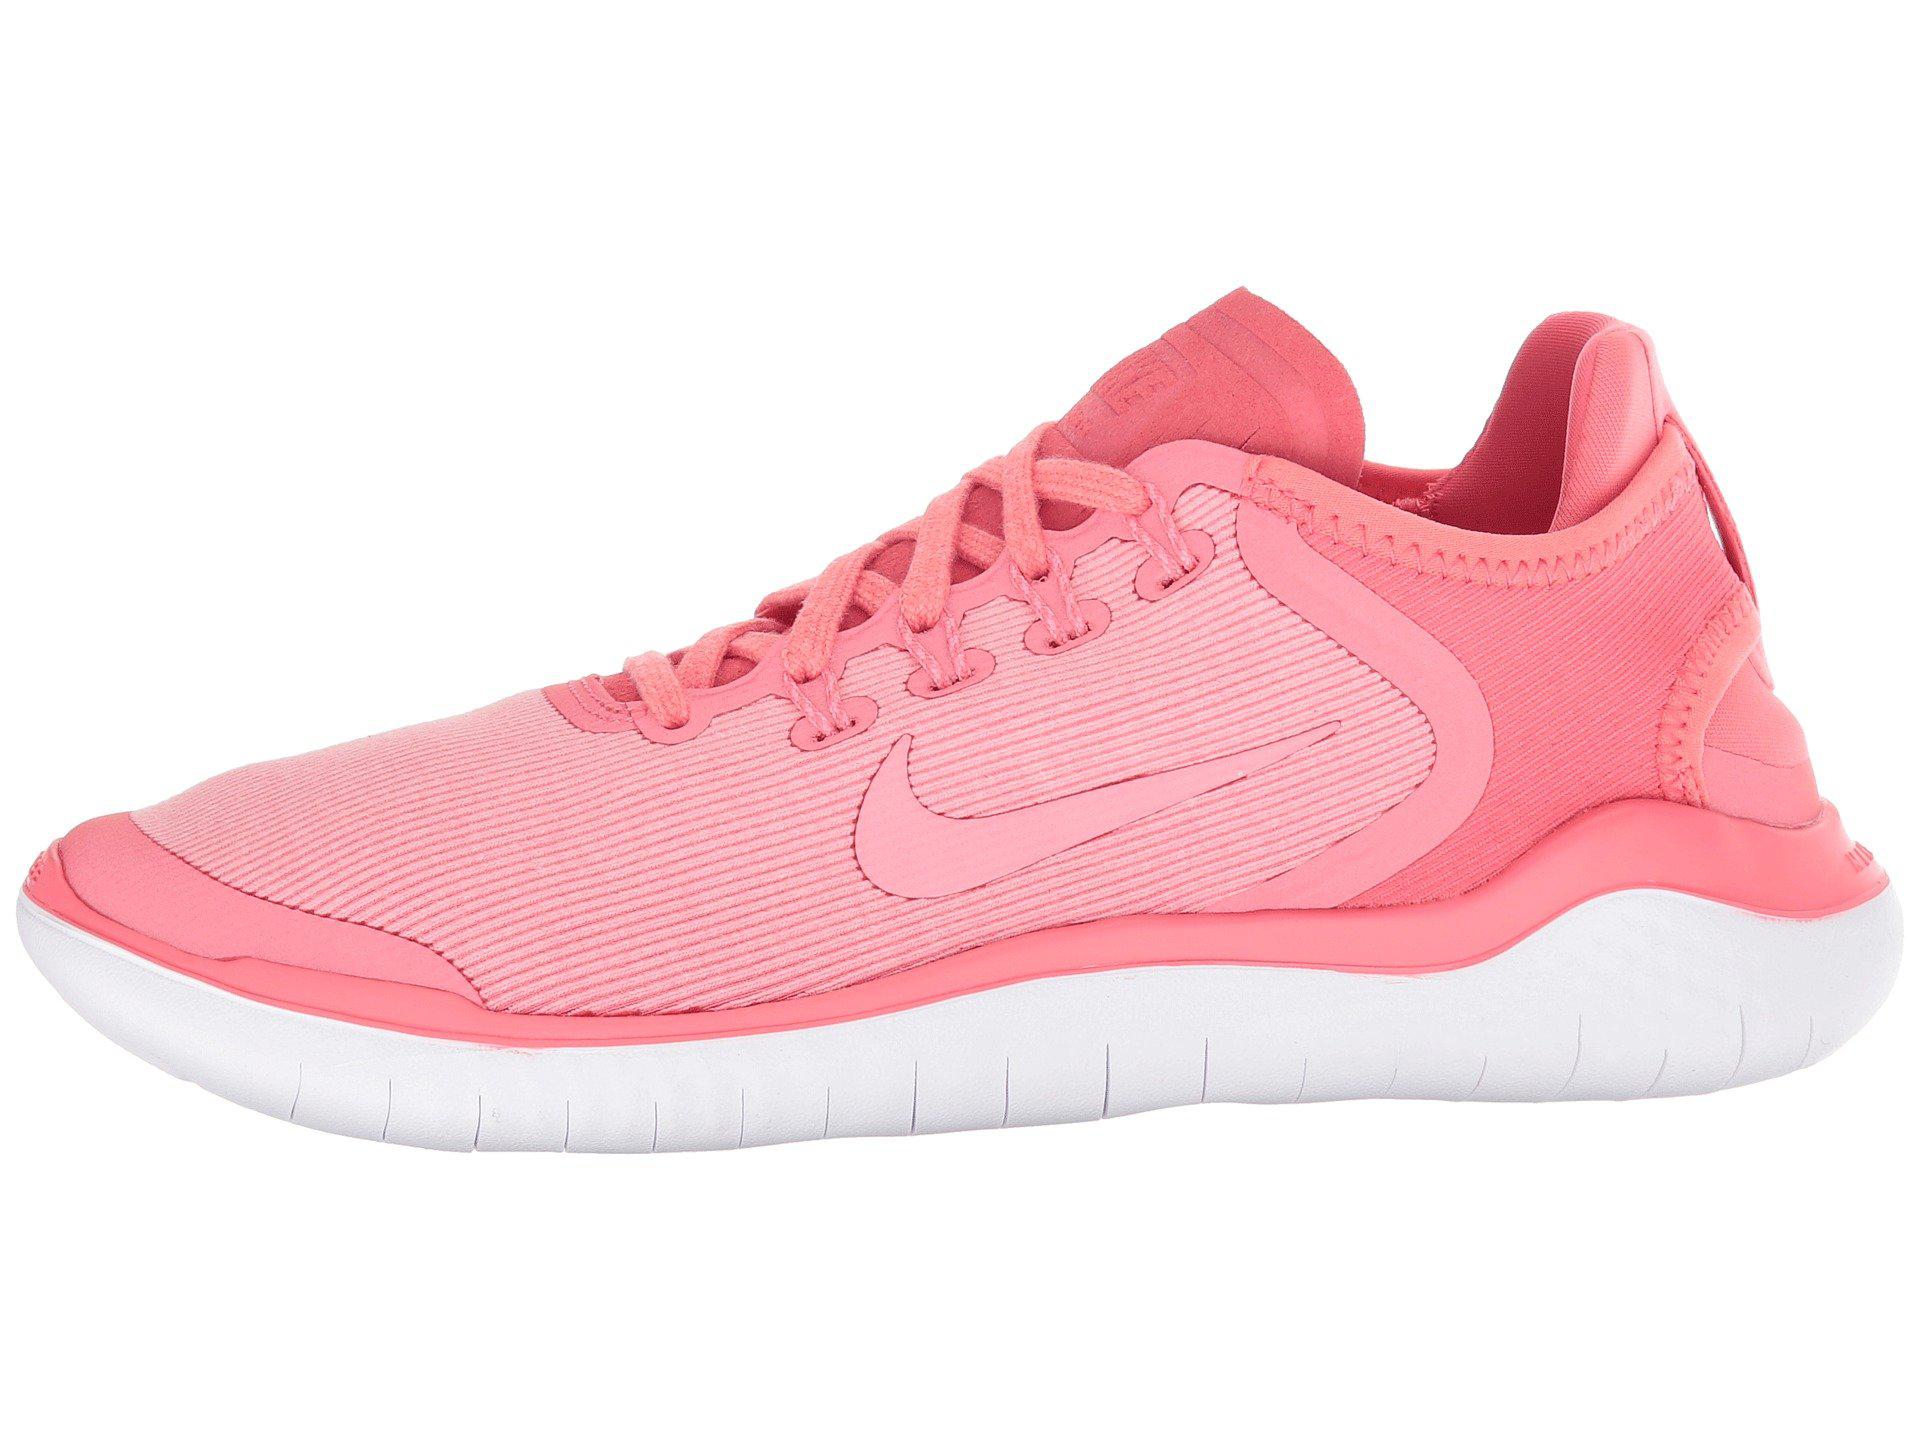 Nike Free Rn 2018 Running Shoe in Pink | Lyst